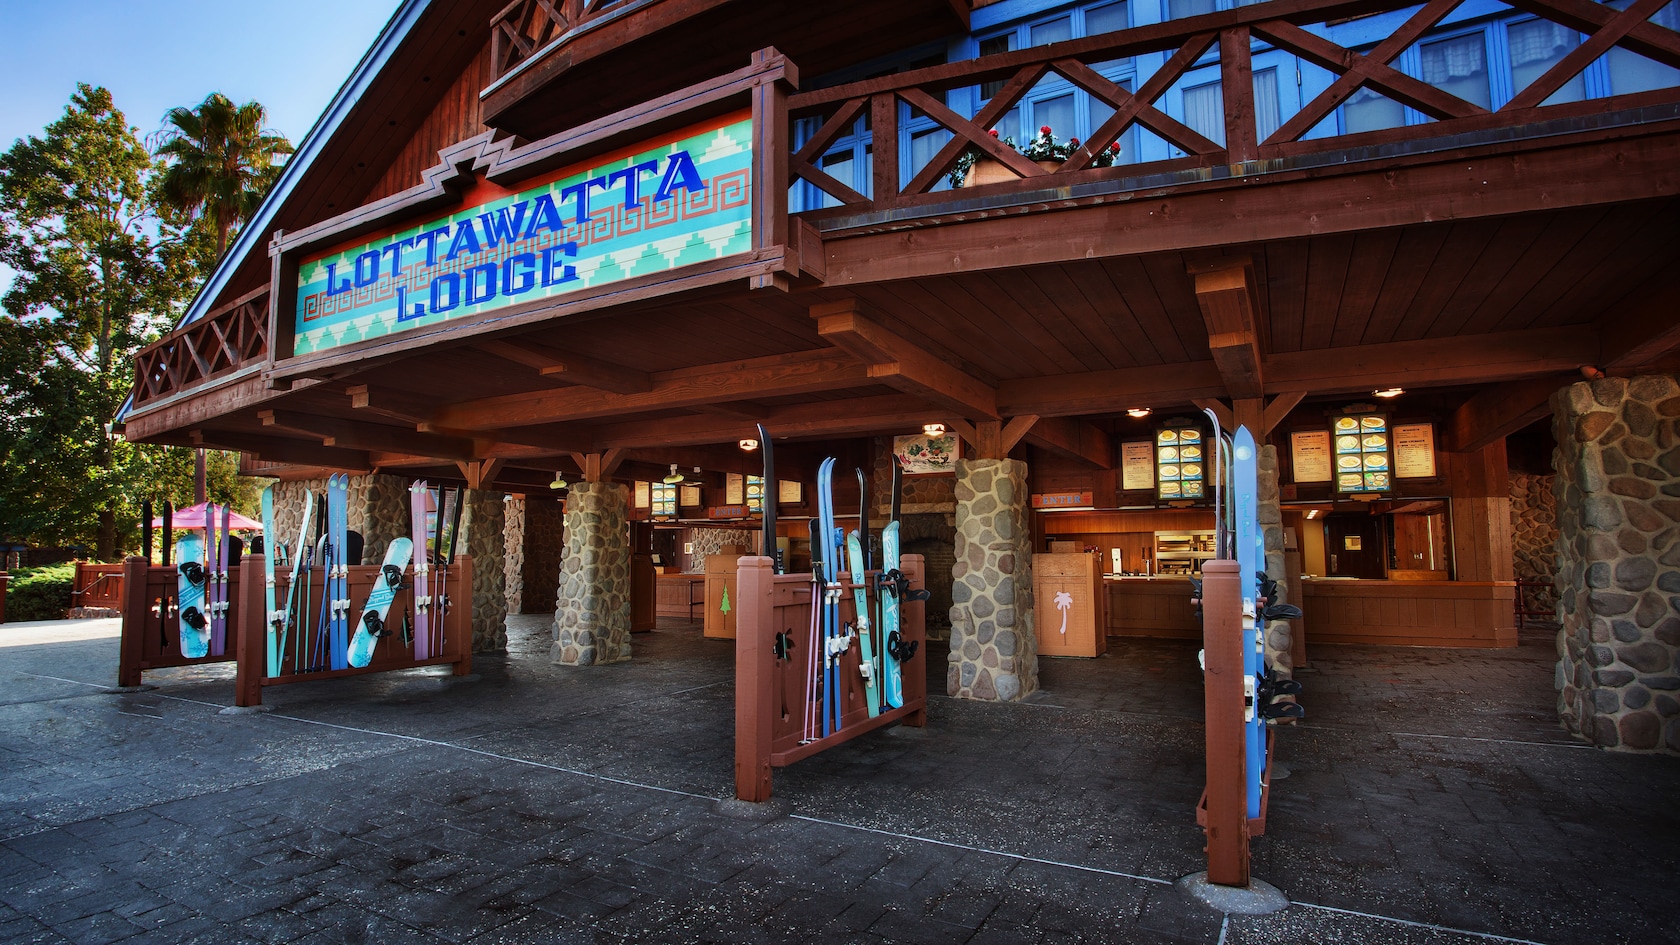 Lottawatta Lodge, dining located
at Disney's Blizzard Beach Water Park